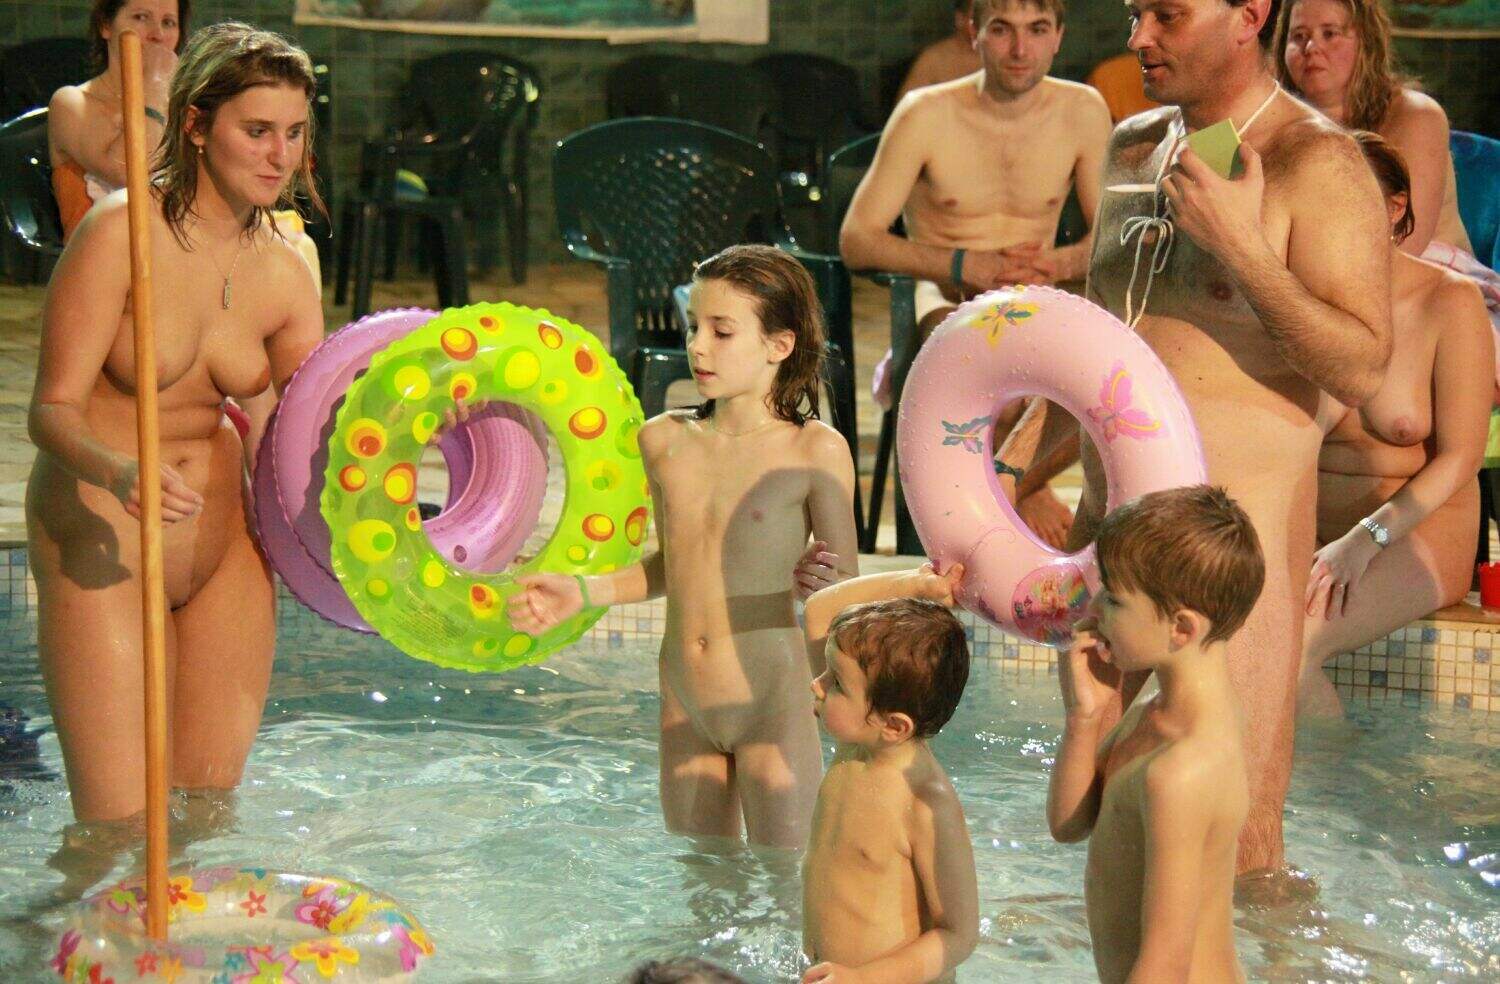 Photo of nudist families - Naturist Club Games [Naturisе Family Events]